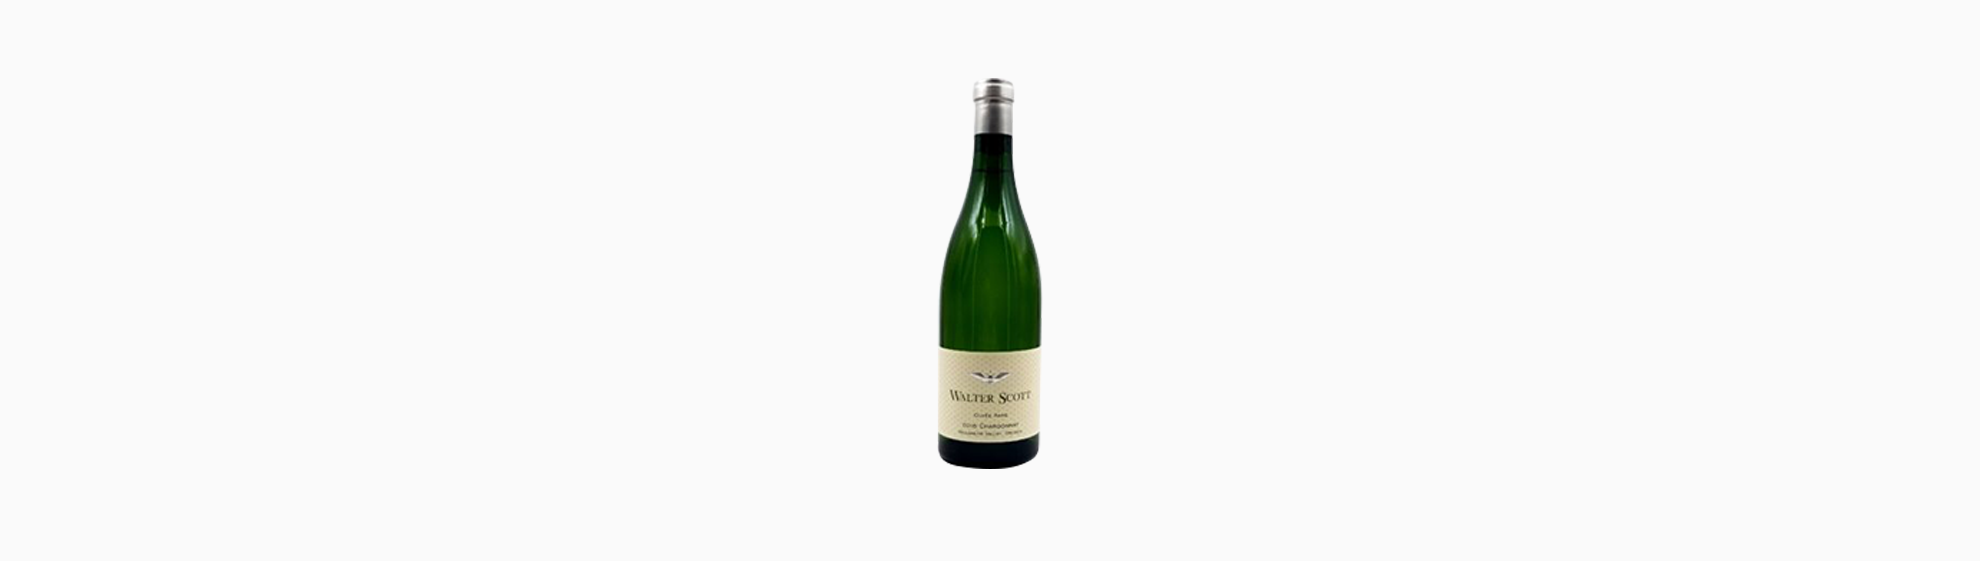 Wine bottle of Walter Scott Cuvee Anne Chardonnay 2018 (Eola-Amity Hills)